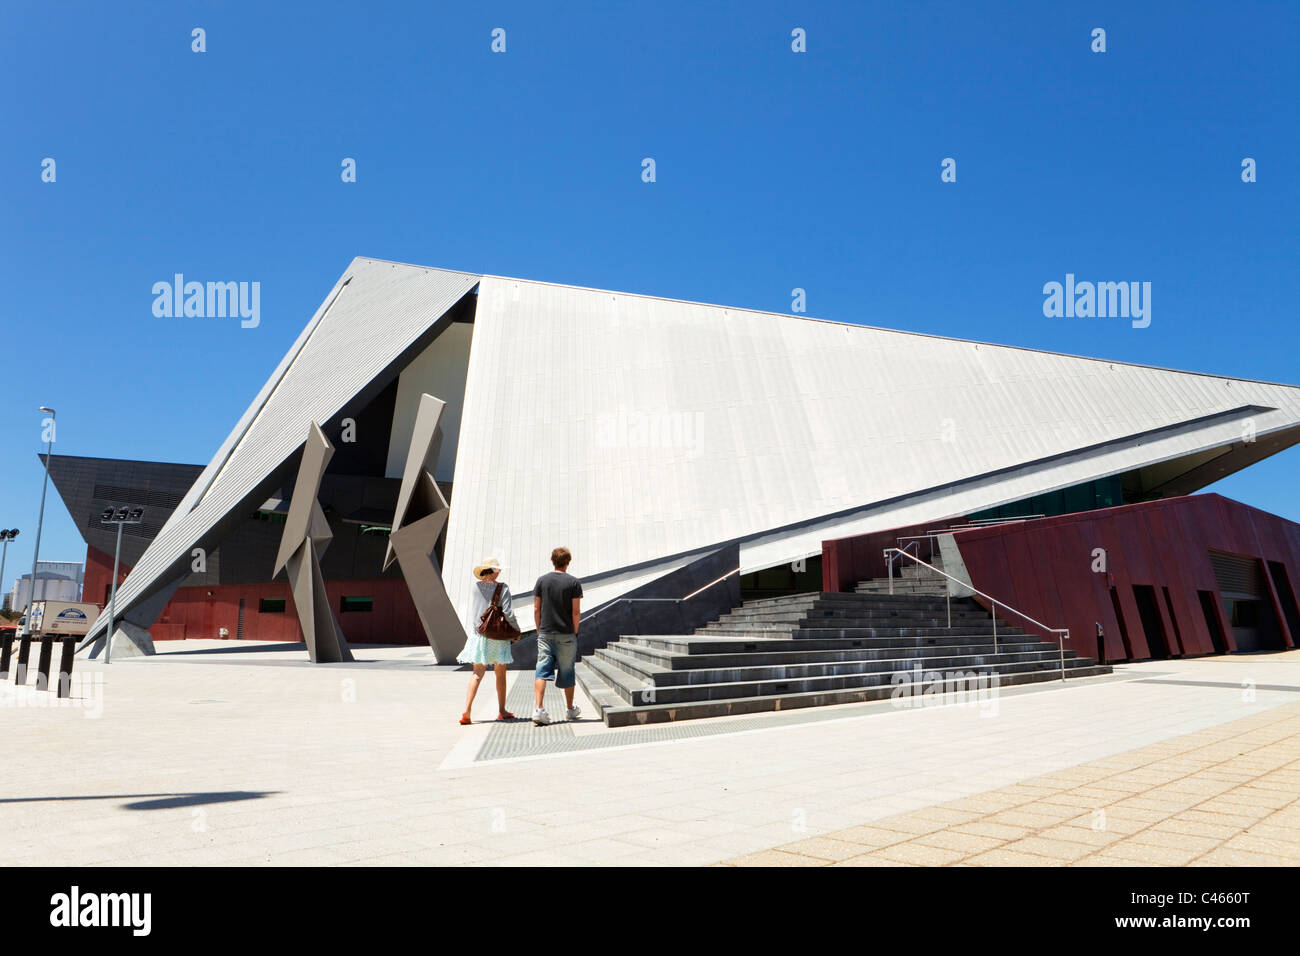 Zu zweit am Albany-Entertainment-Center. Albany, Western Australia, Australien Stockfoto